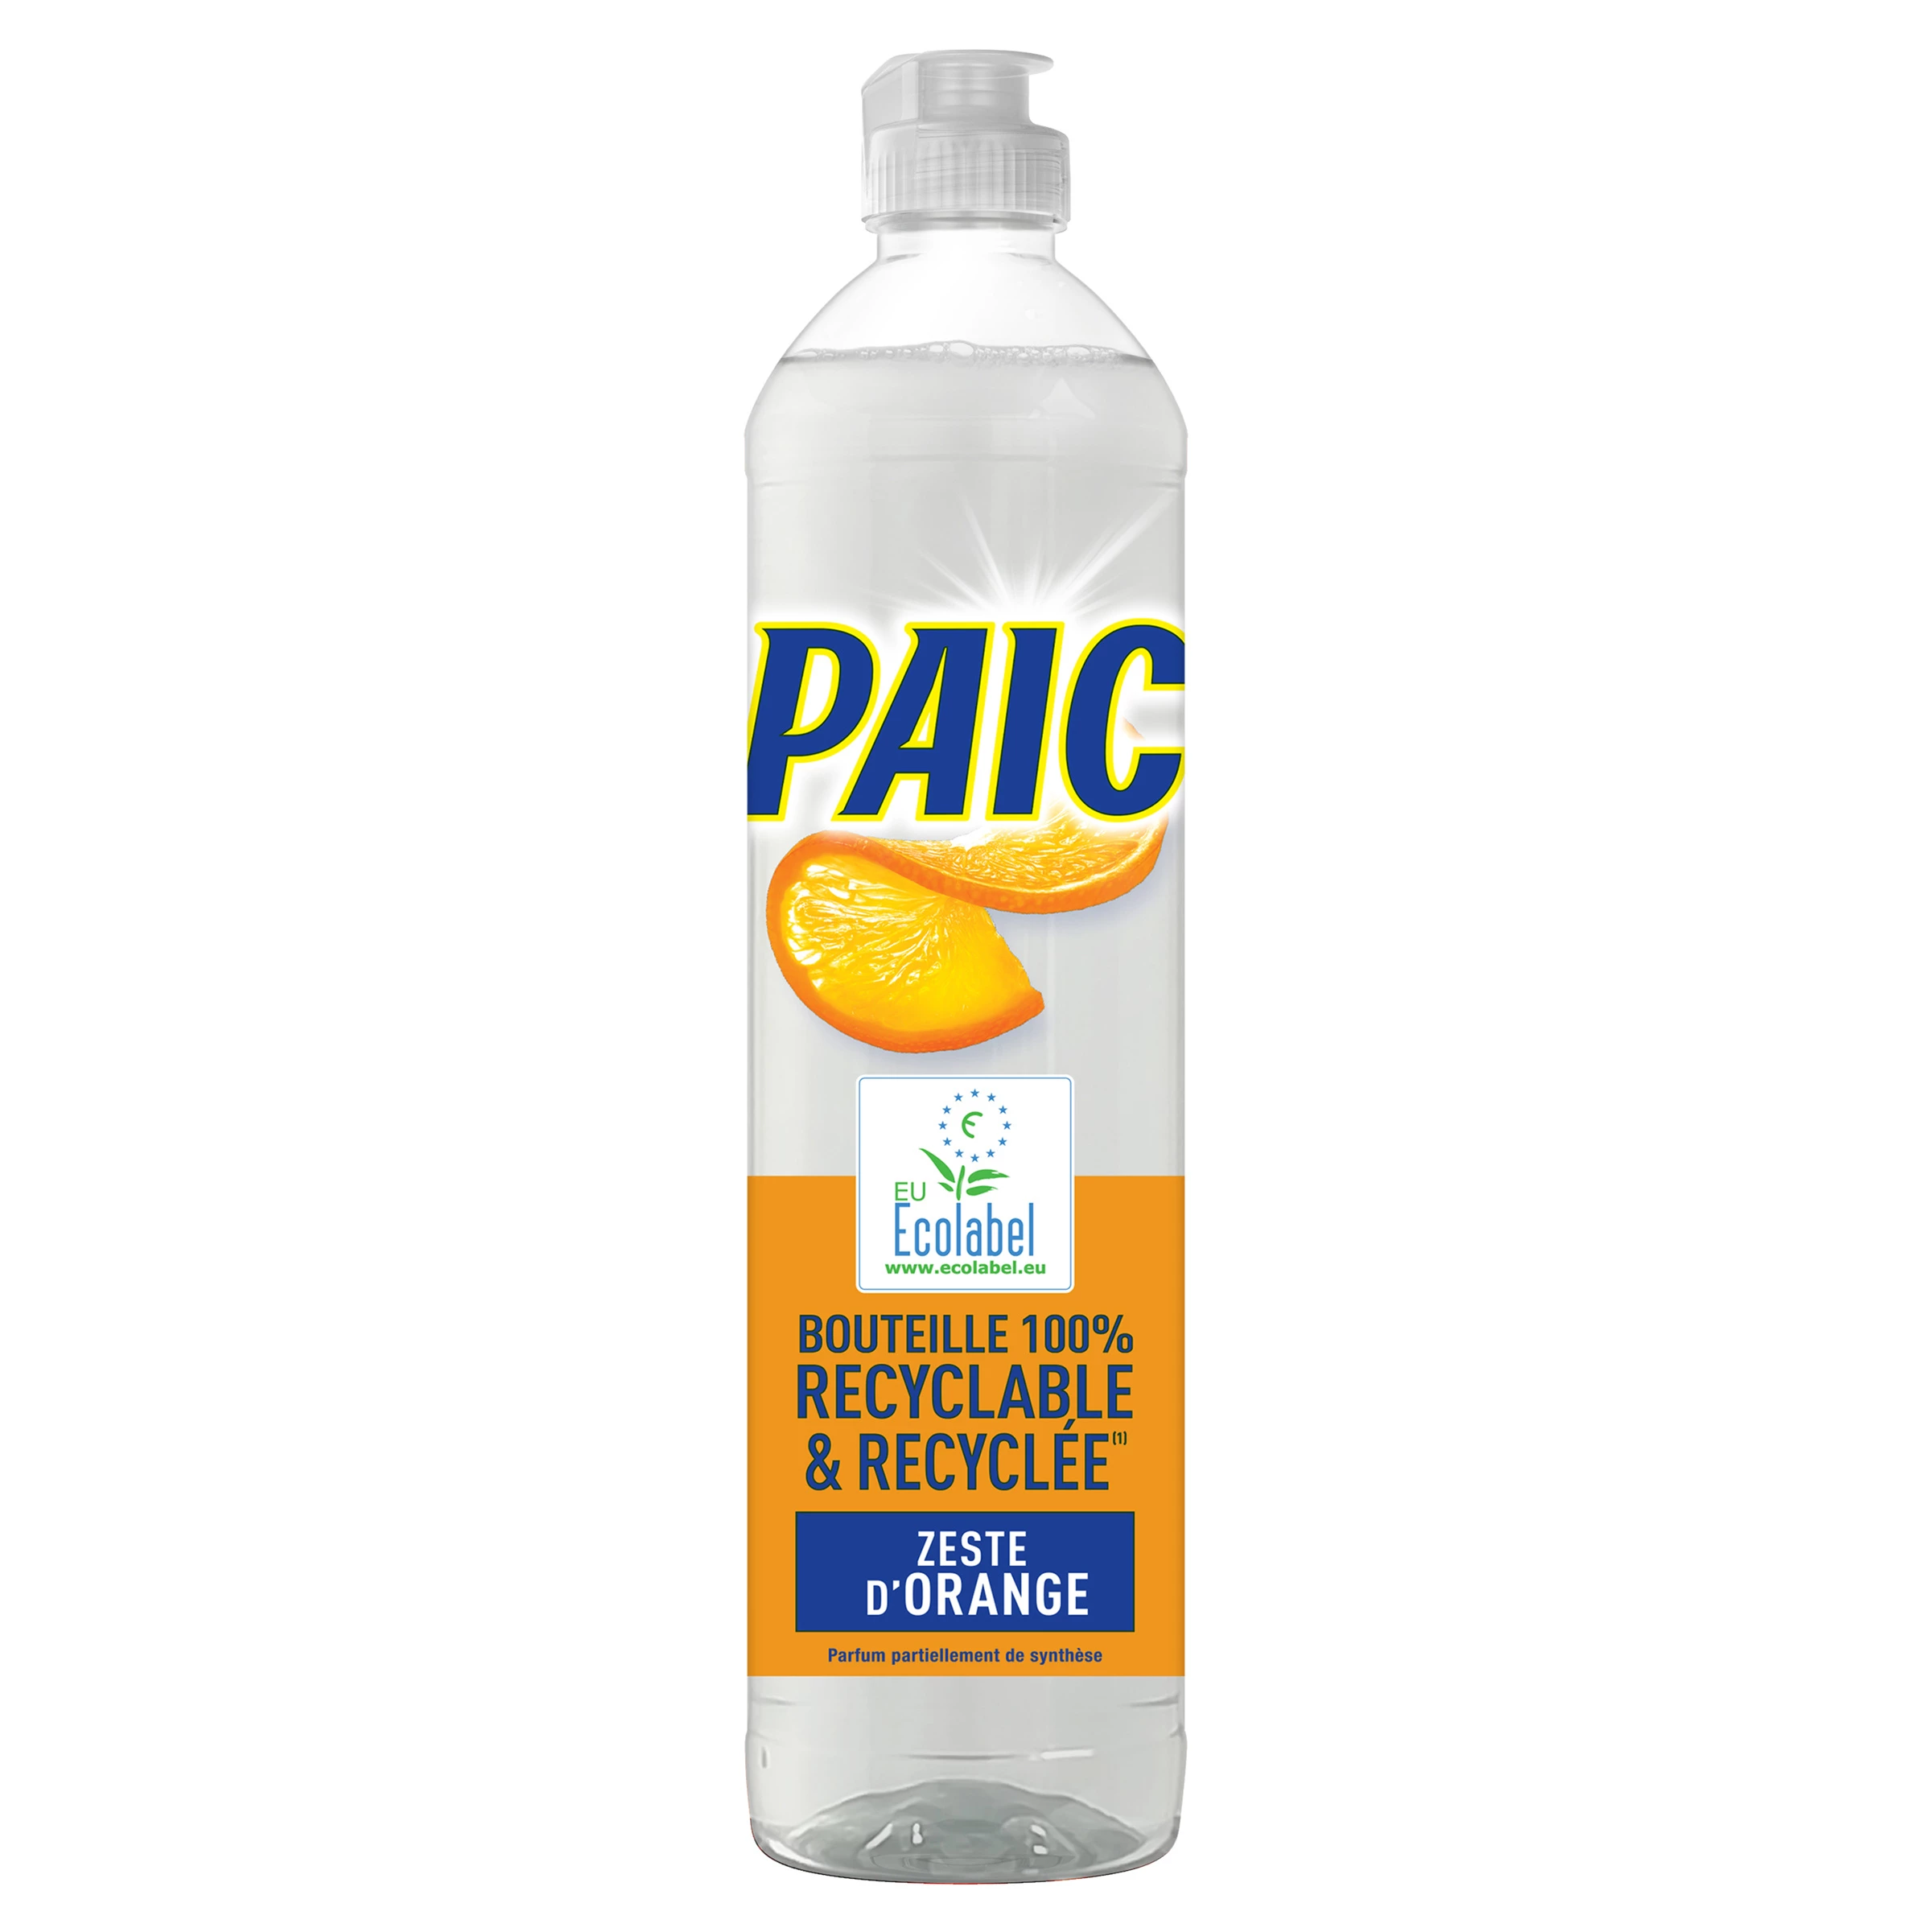 Paic Cylind Eco Orange 550ml